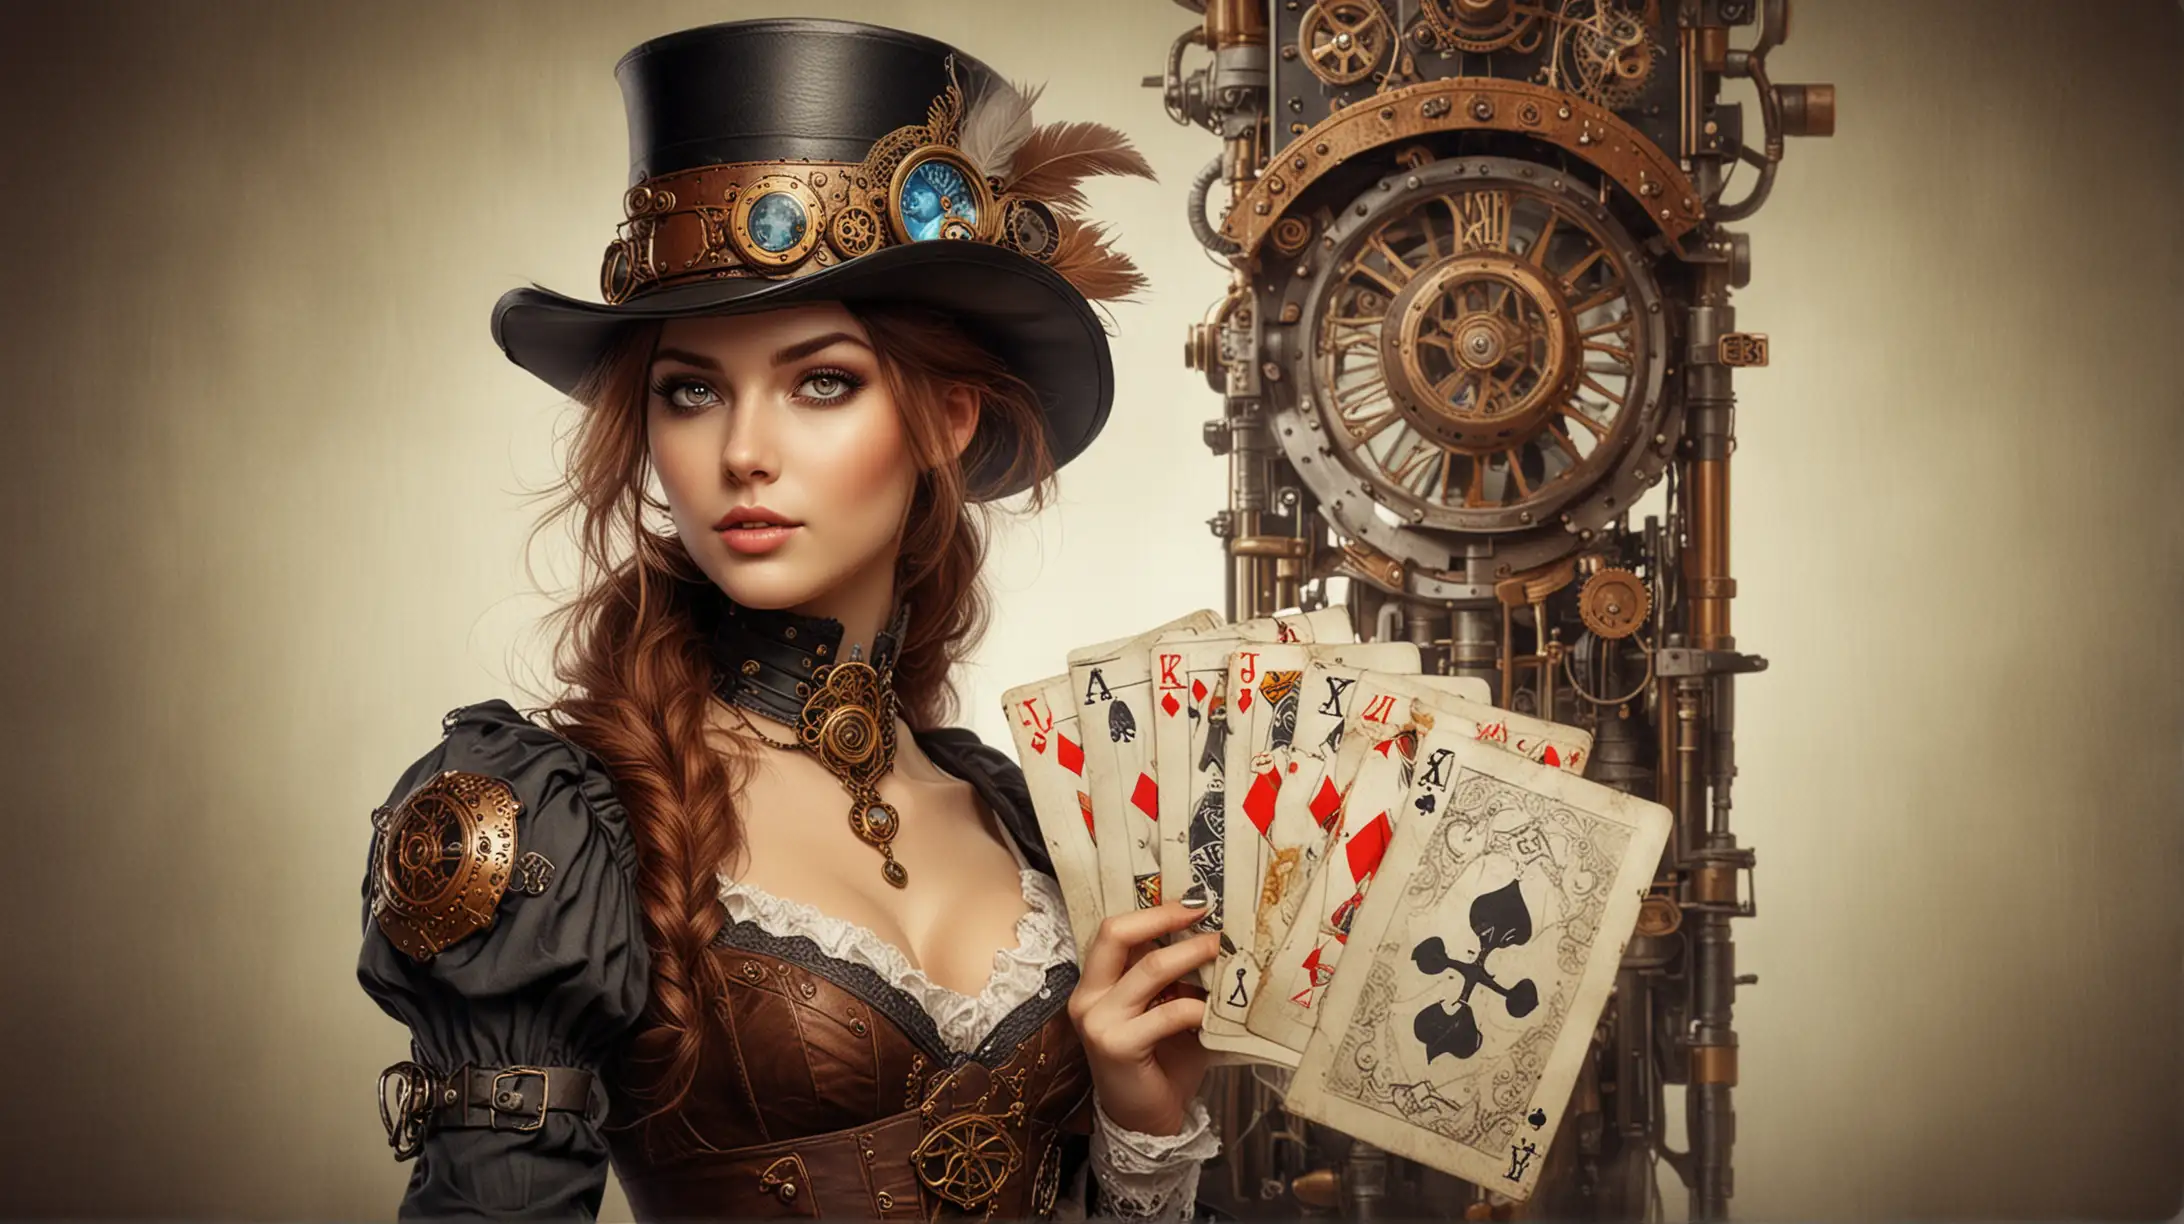 Steampunk Woman Playing Cards in Elegant Attire